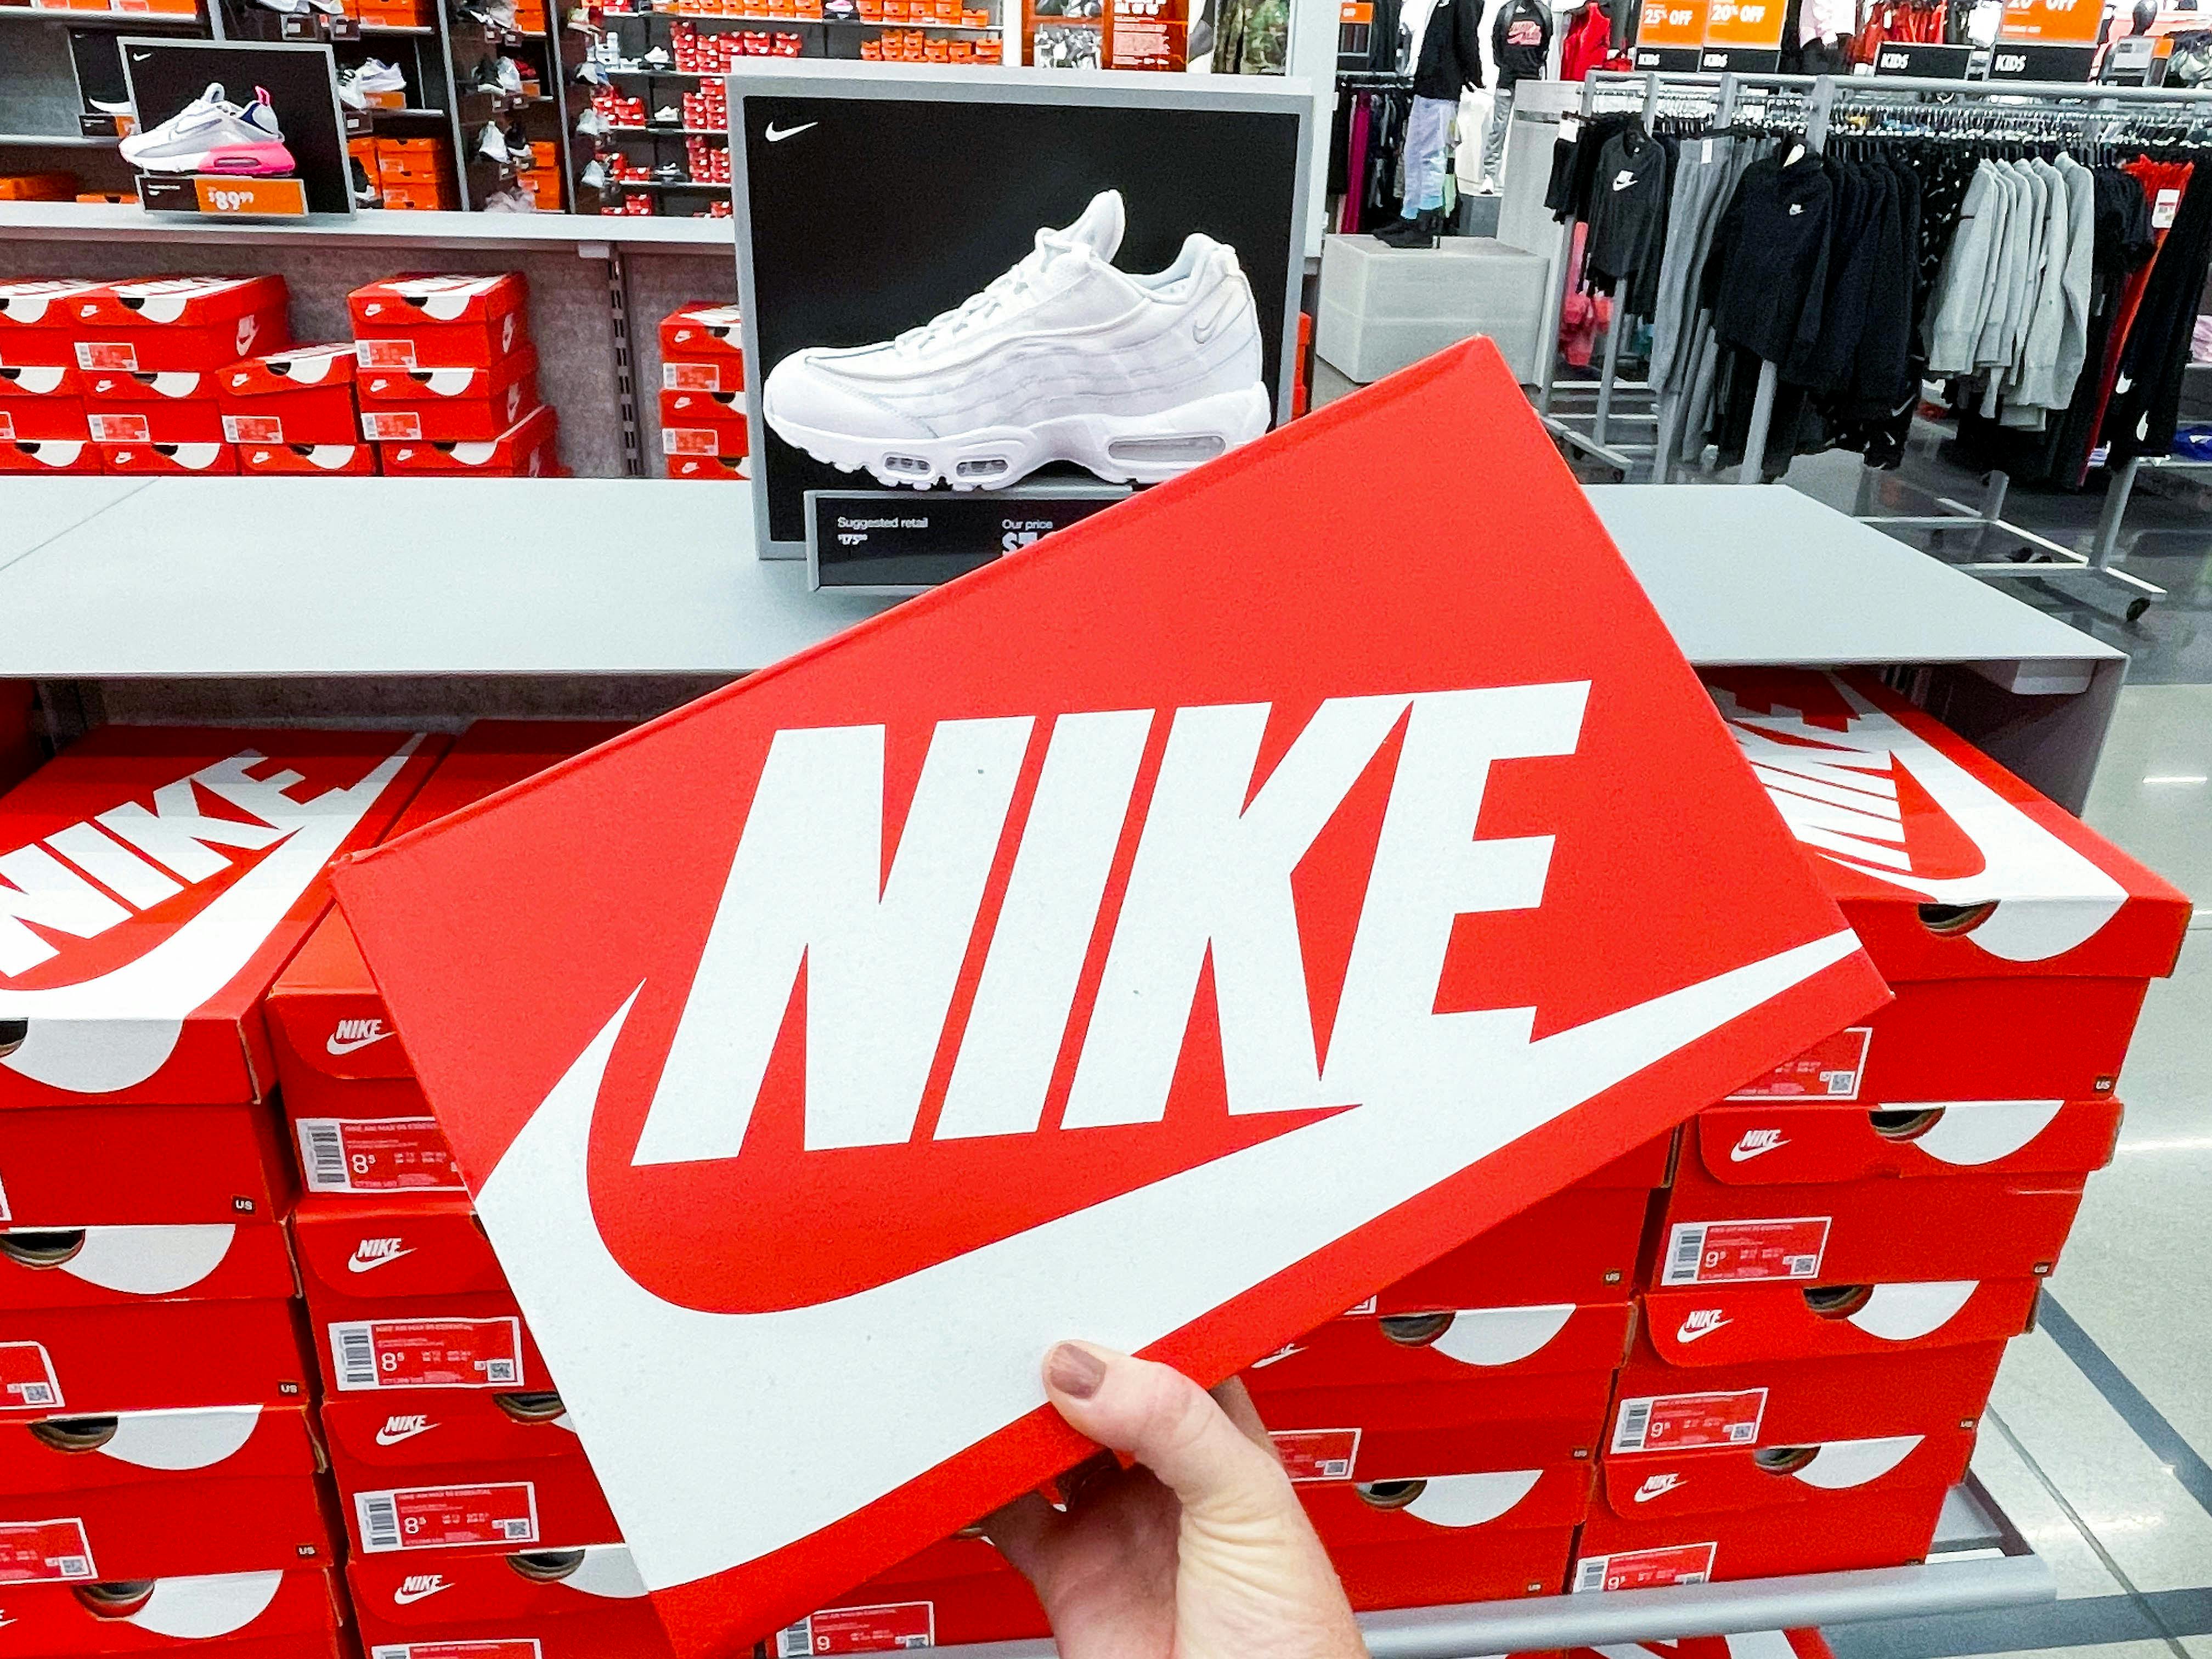 nike-store-shopping-guide-shoes-shoeboxes-17